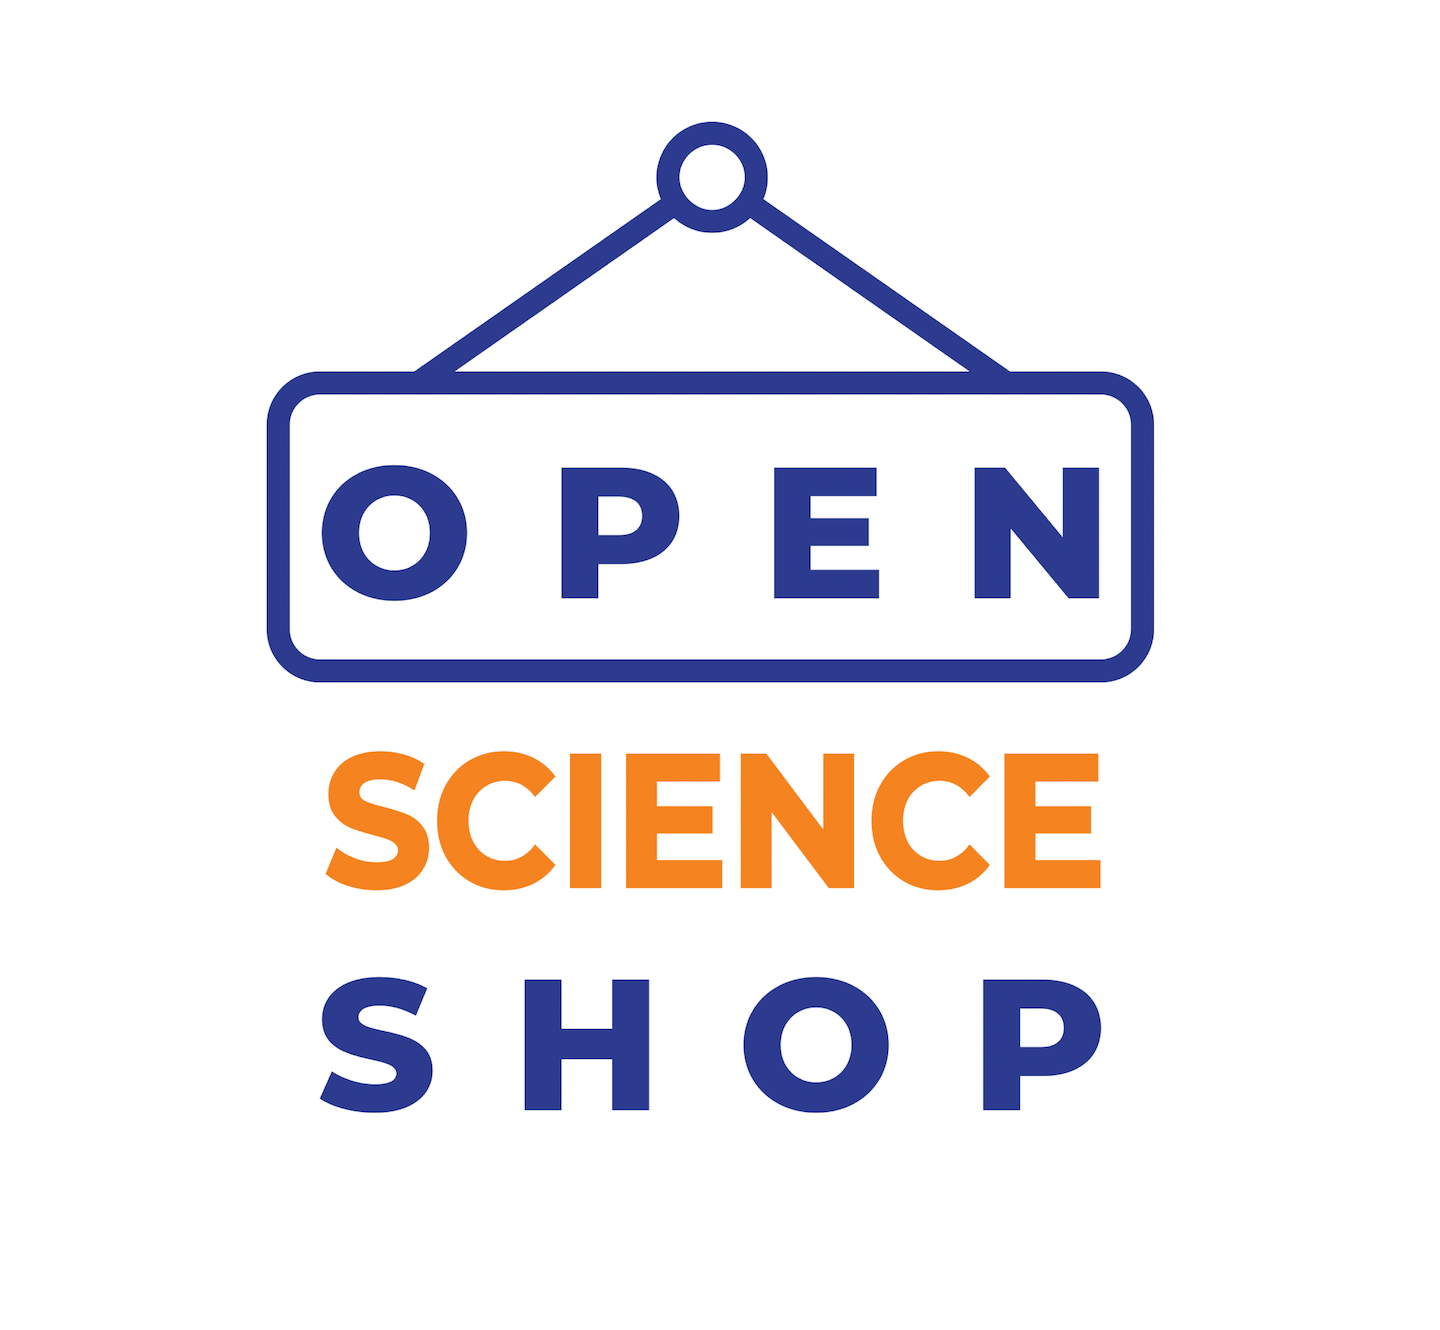 Open Science Shop